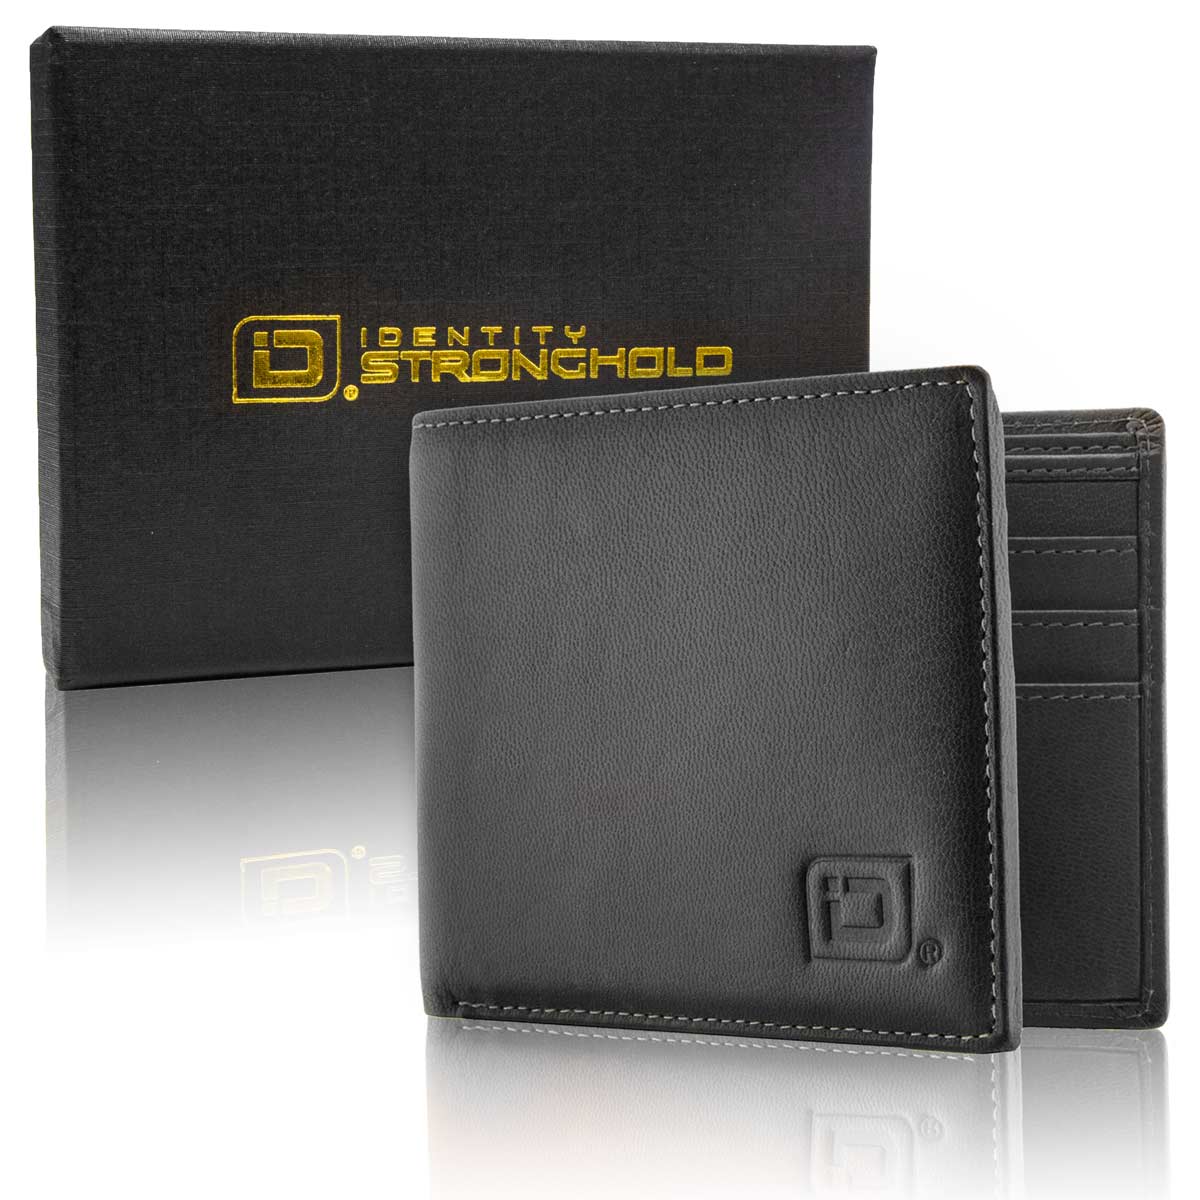 Mens RFID Wallet -  6 Slot Thin Bifold Wallet